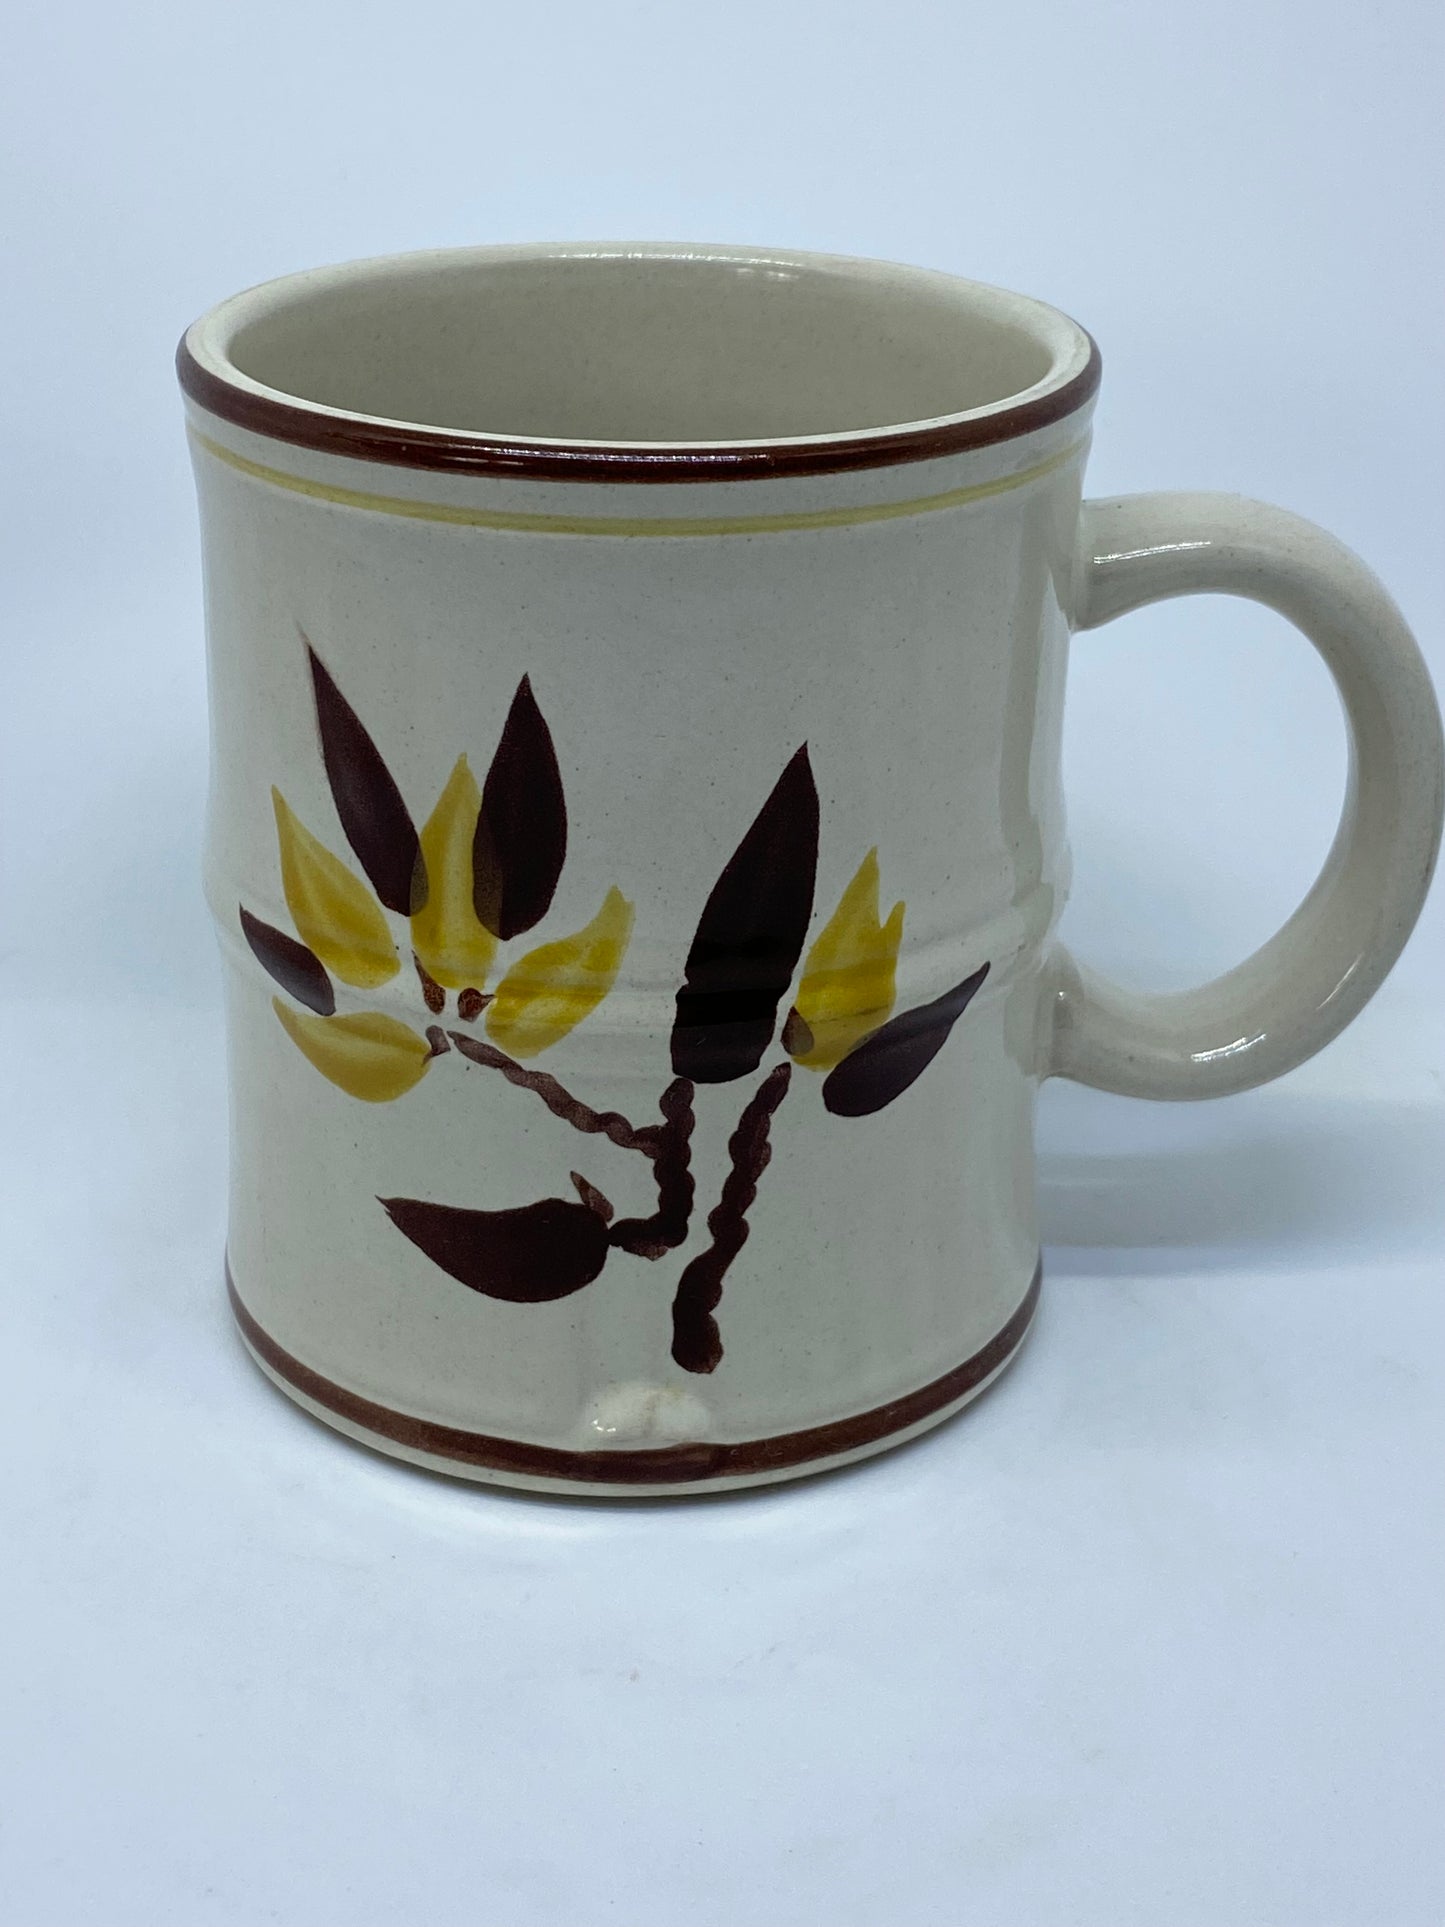 Stonecrest Sherwood Korea 1-3 Ji vintage mug - willow design